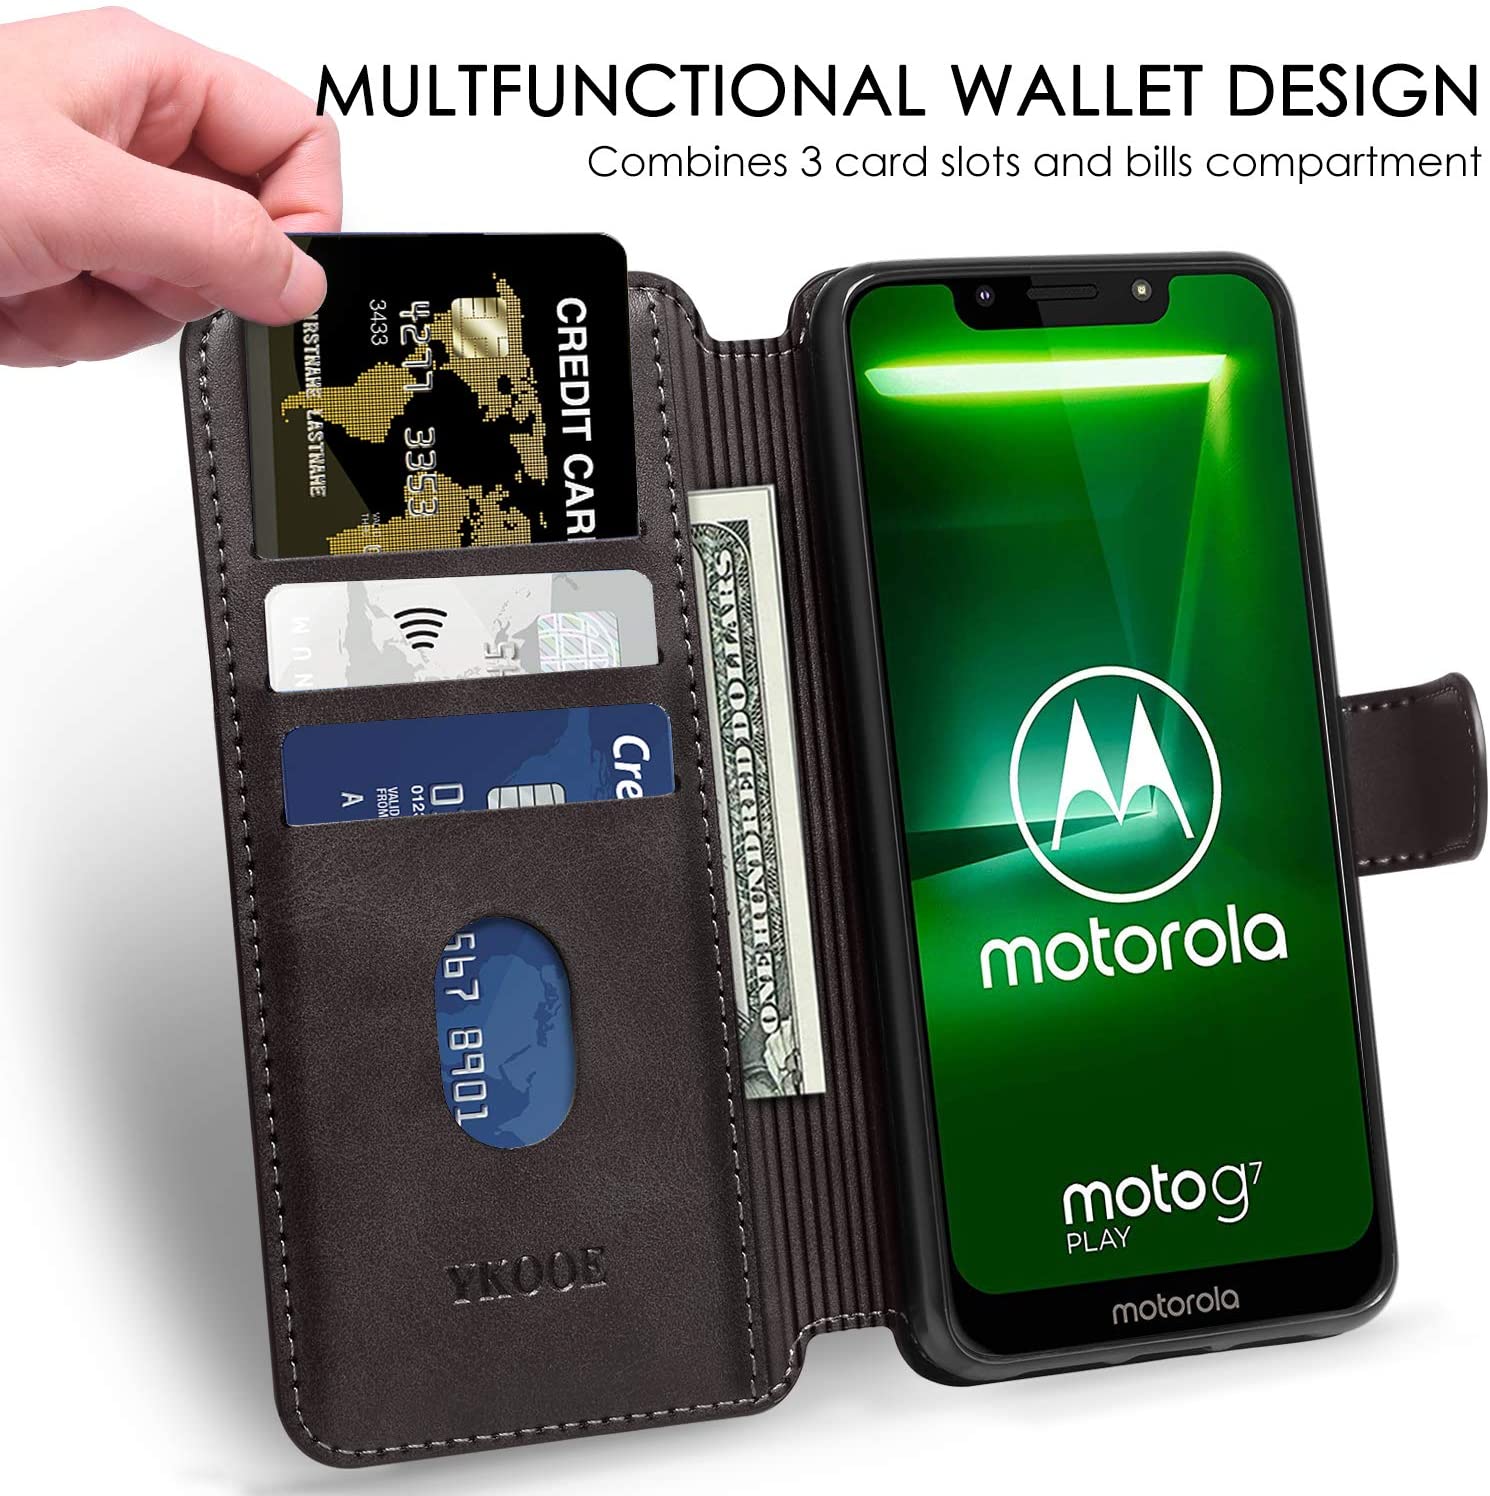 ykooe Case for Motorola Moto G7 Play - Black - e4cents